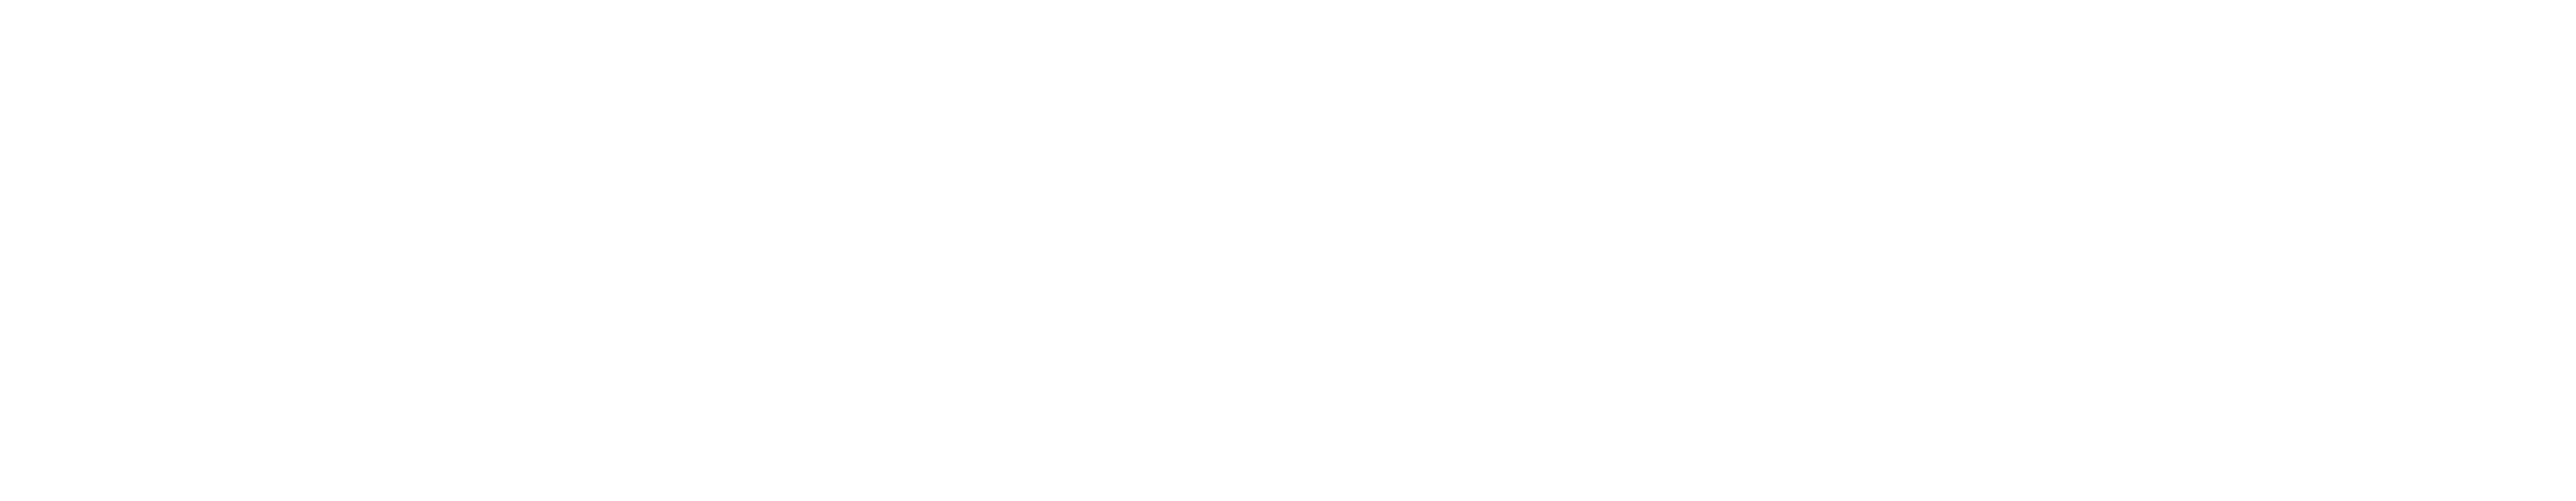 Murray - Orwosky Funeral Home Logo